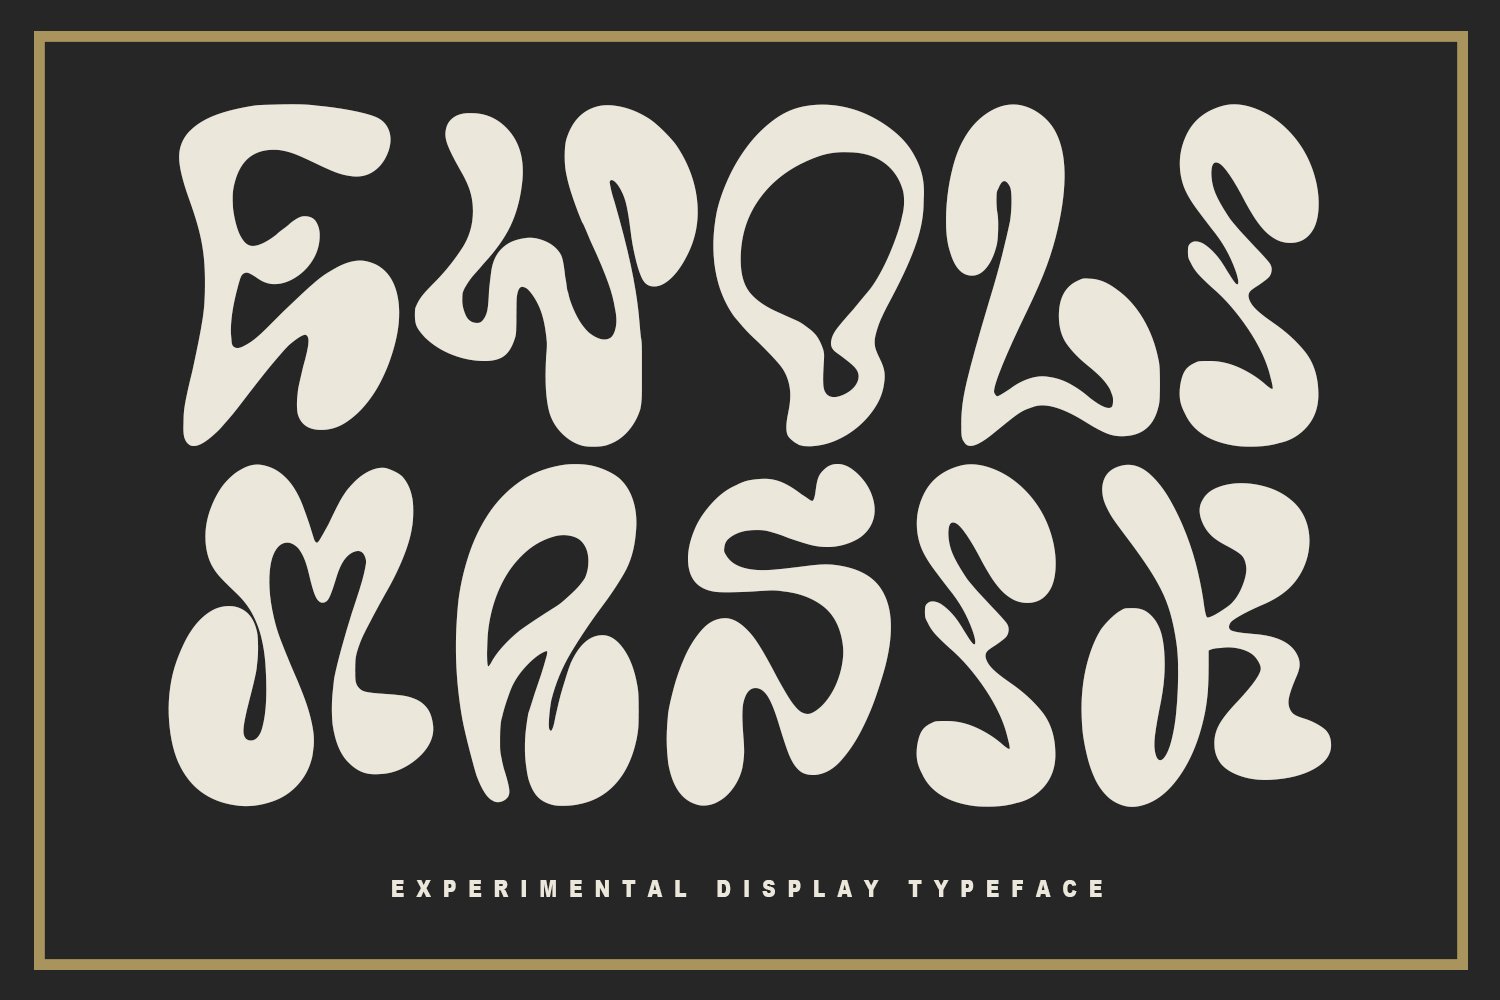 Ewoli Masik Experimental Display Typeface - Design Cuts